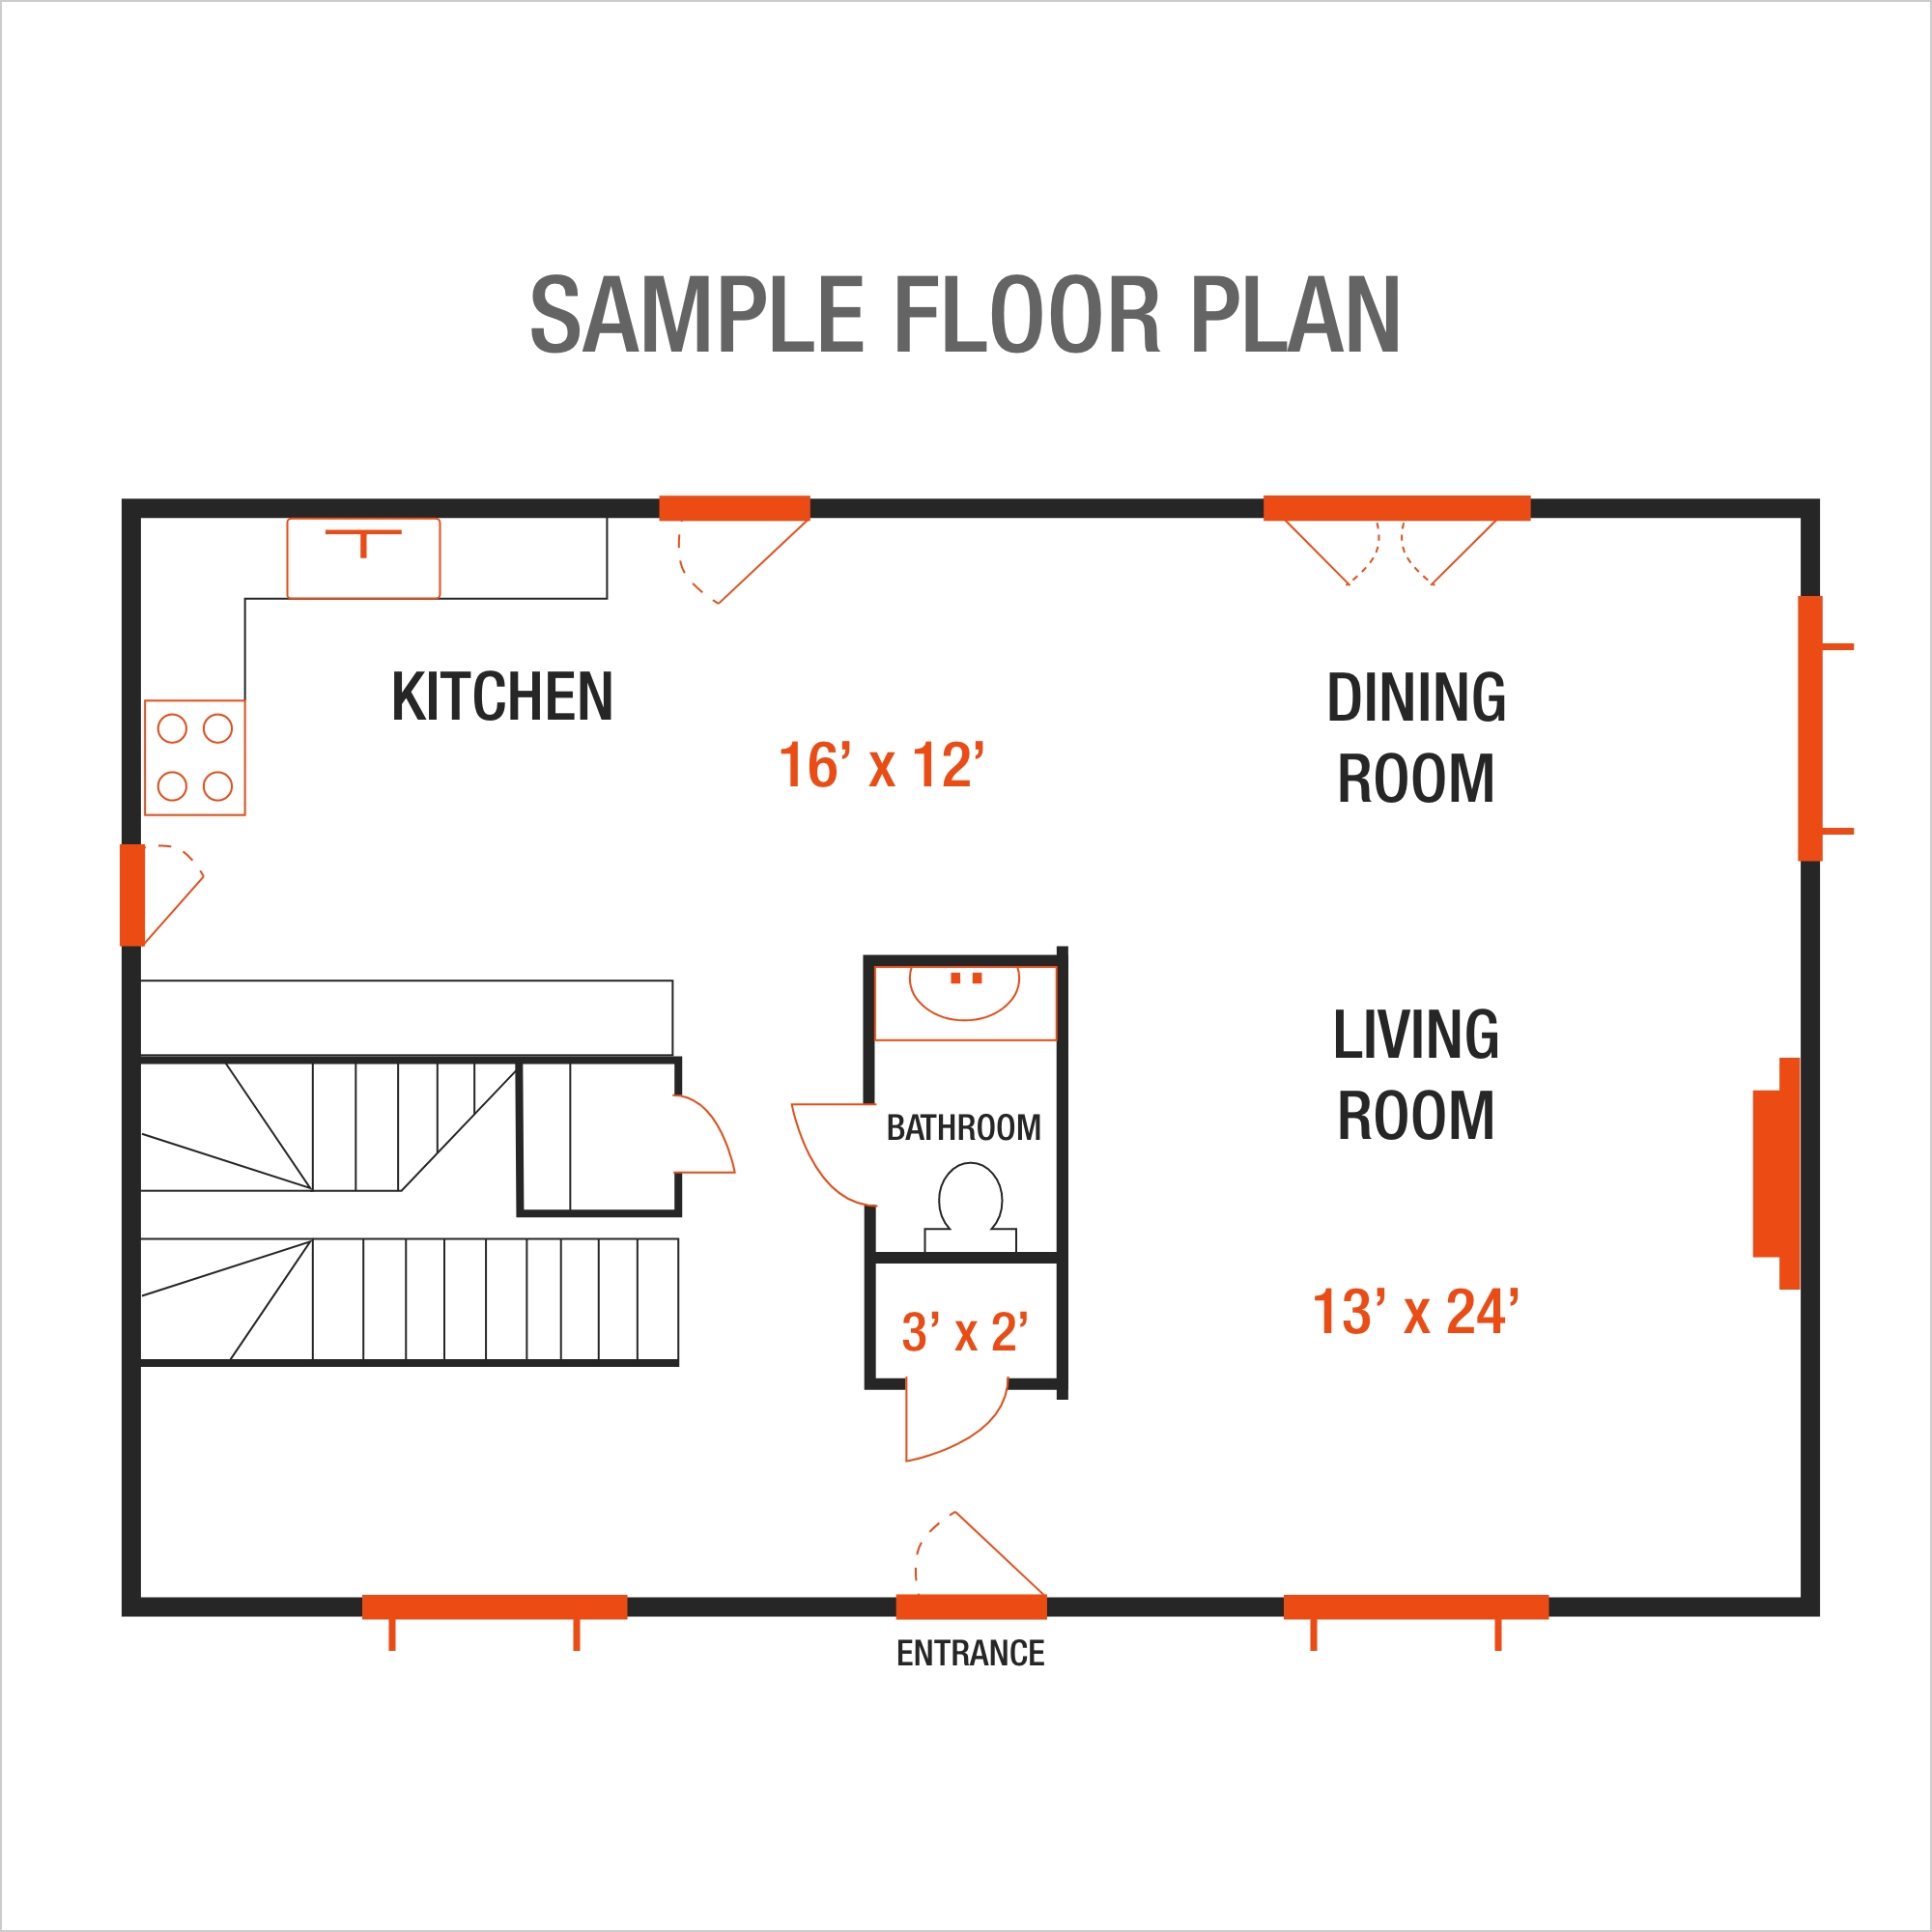 A sample floor plan.